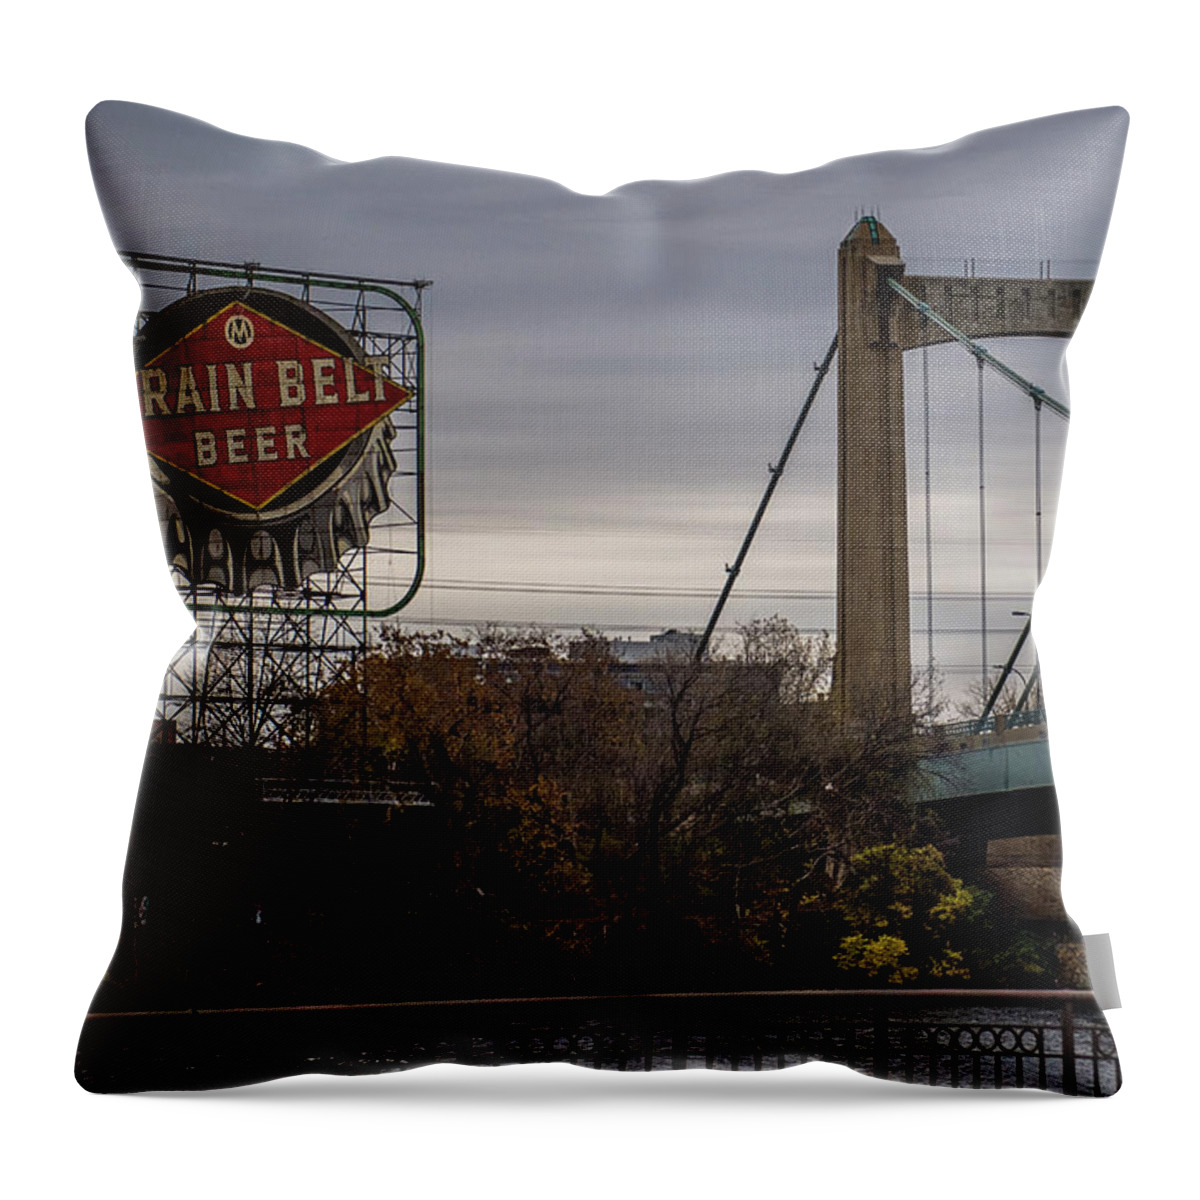 Grain Belt Beer Sign Throw Pillow featuring the photograph Minneapolis Landmark by Paul Freidlund